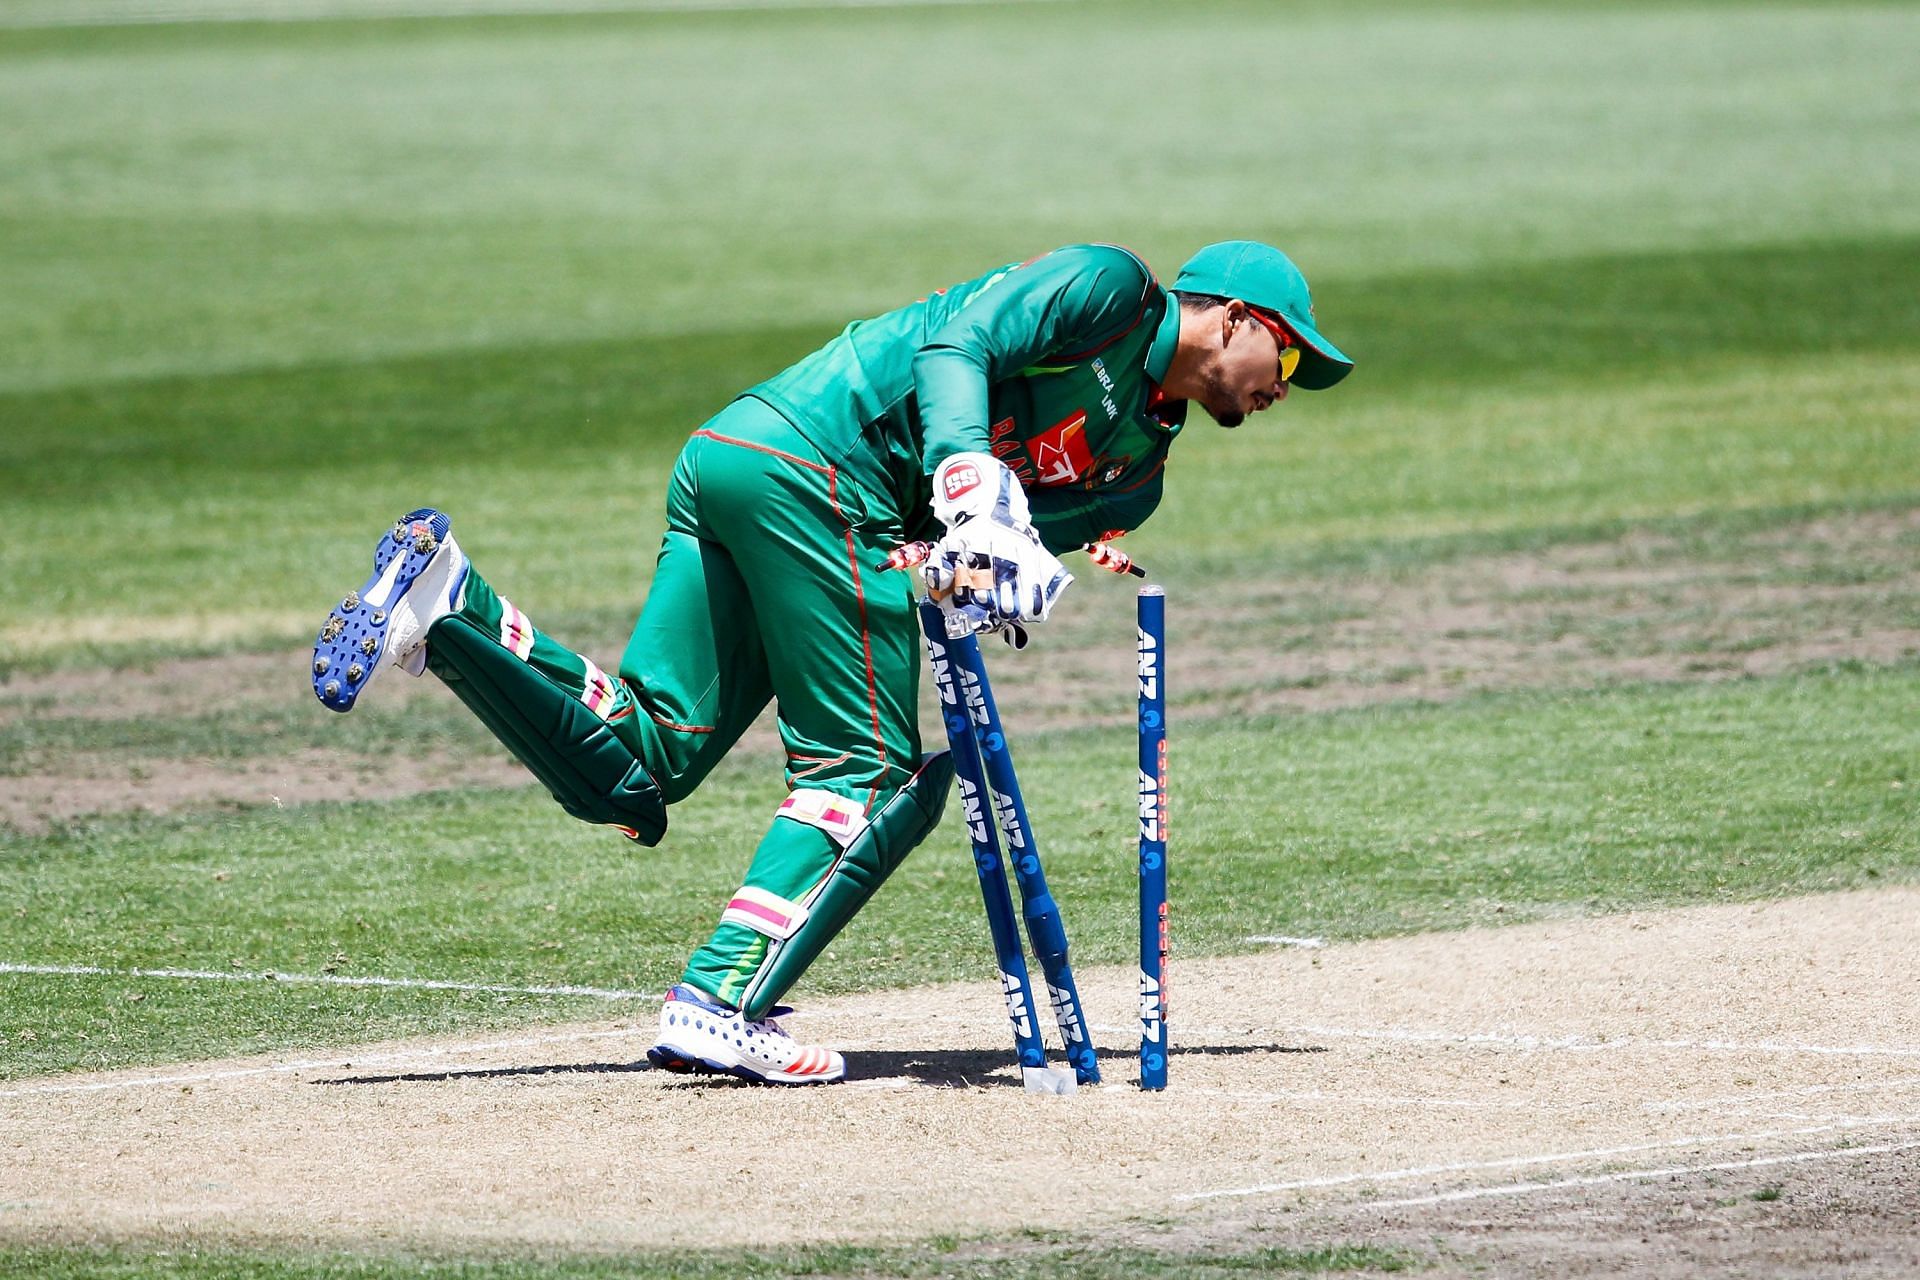 New Zealand v Bangladesh - 2nd ODI